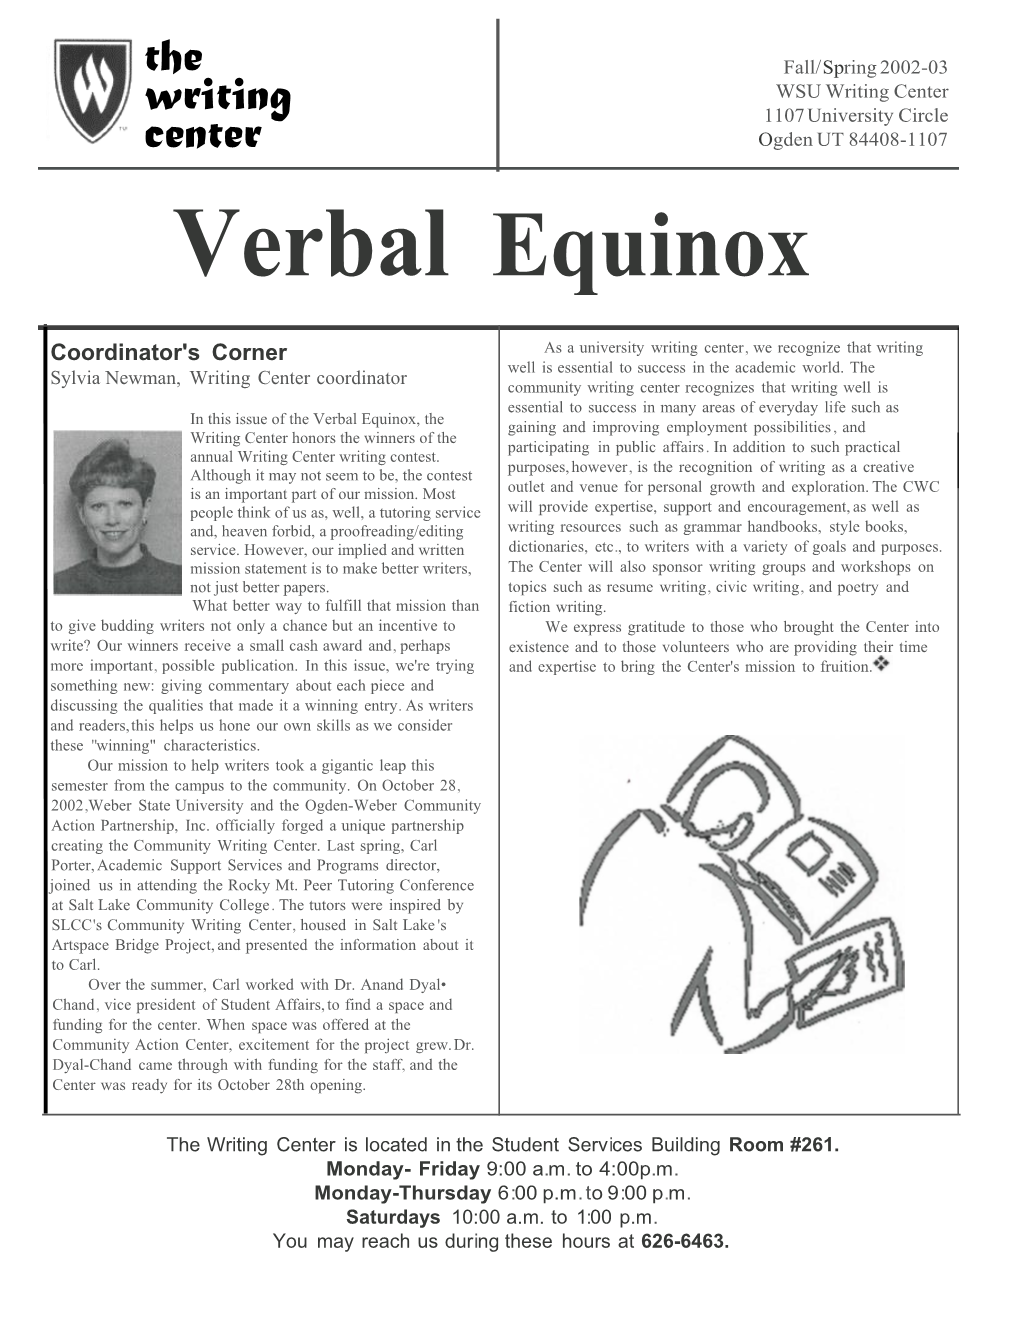 Verbal Equinox